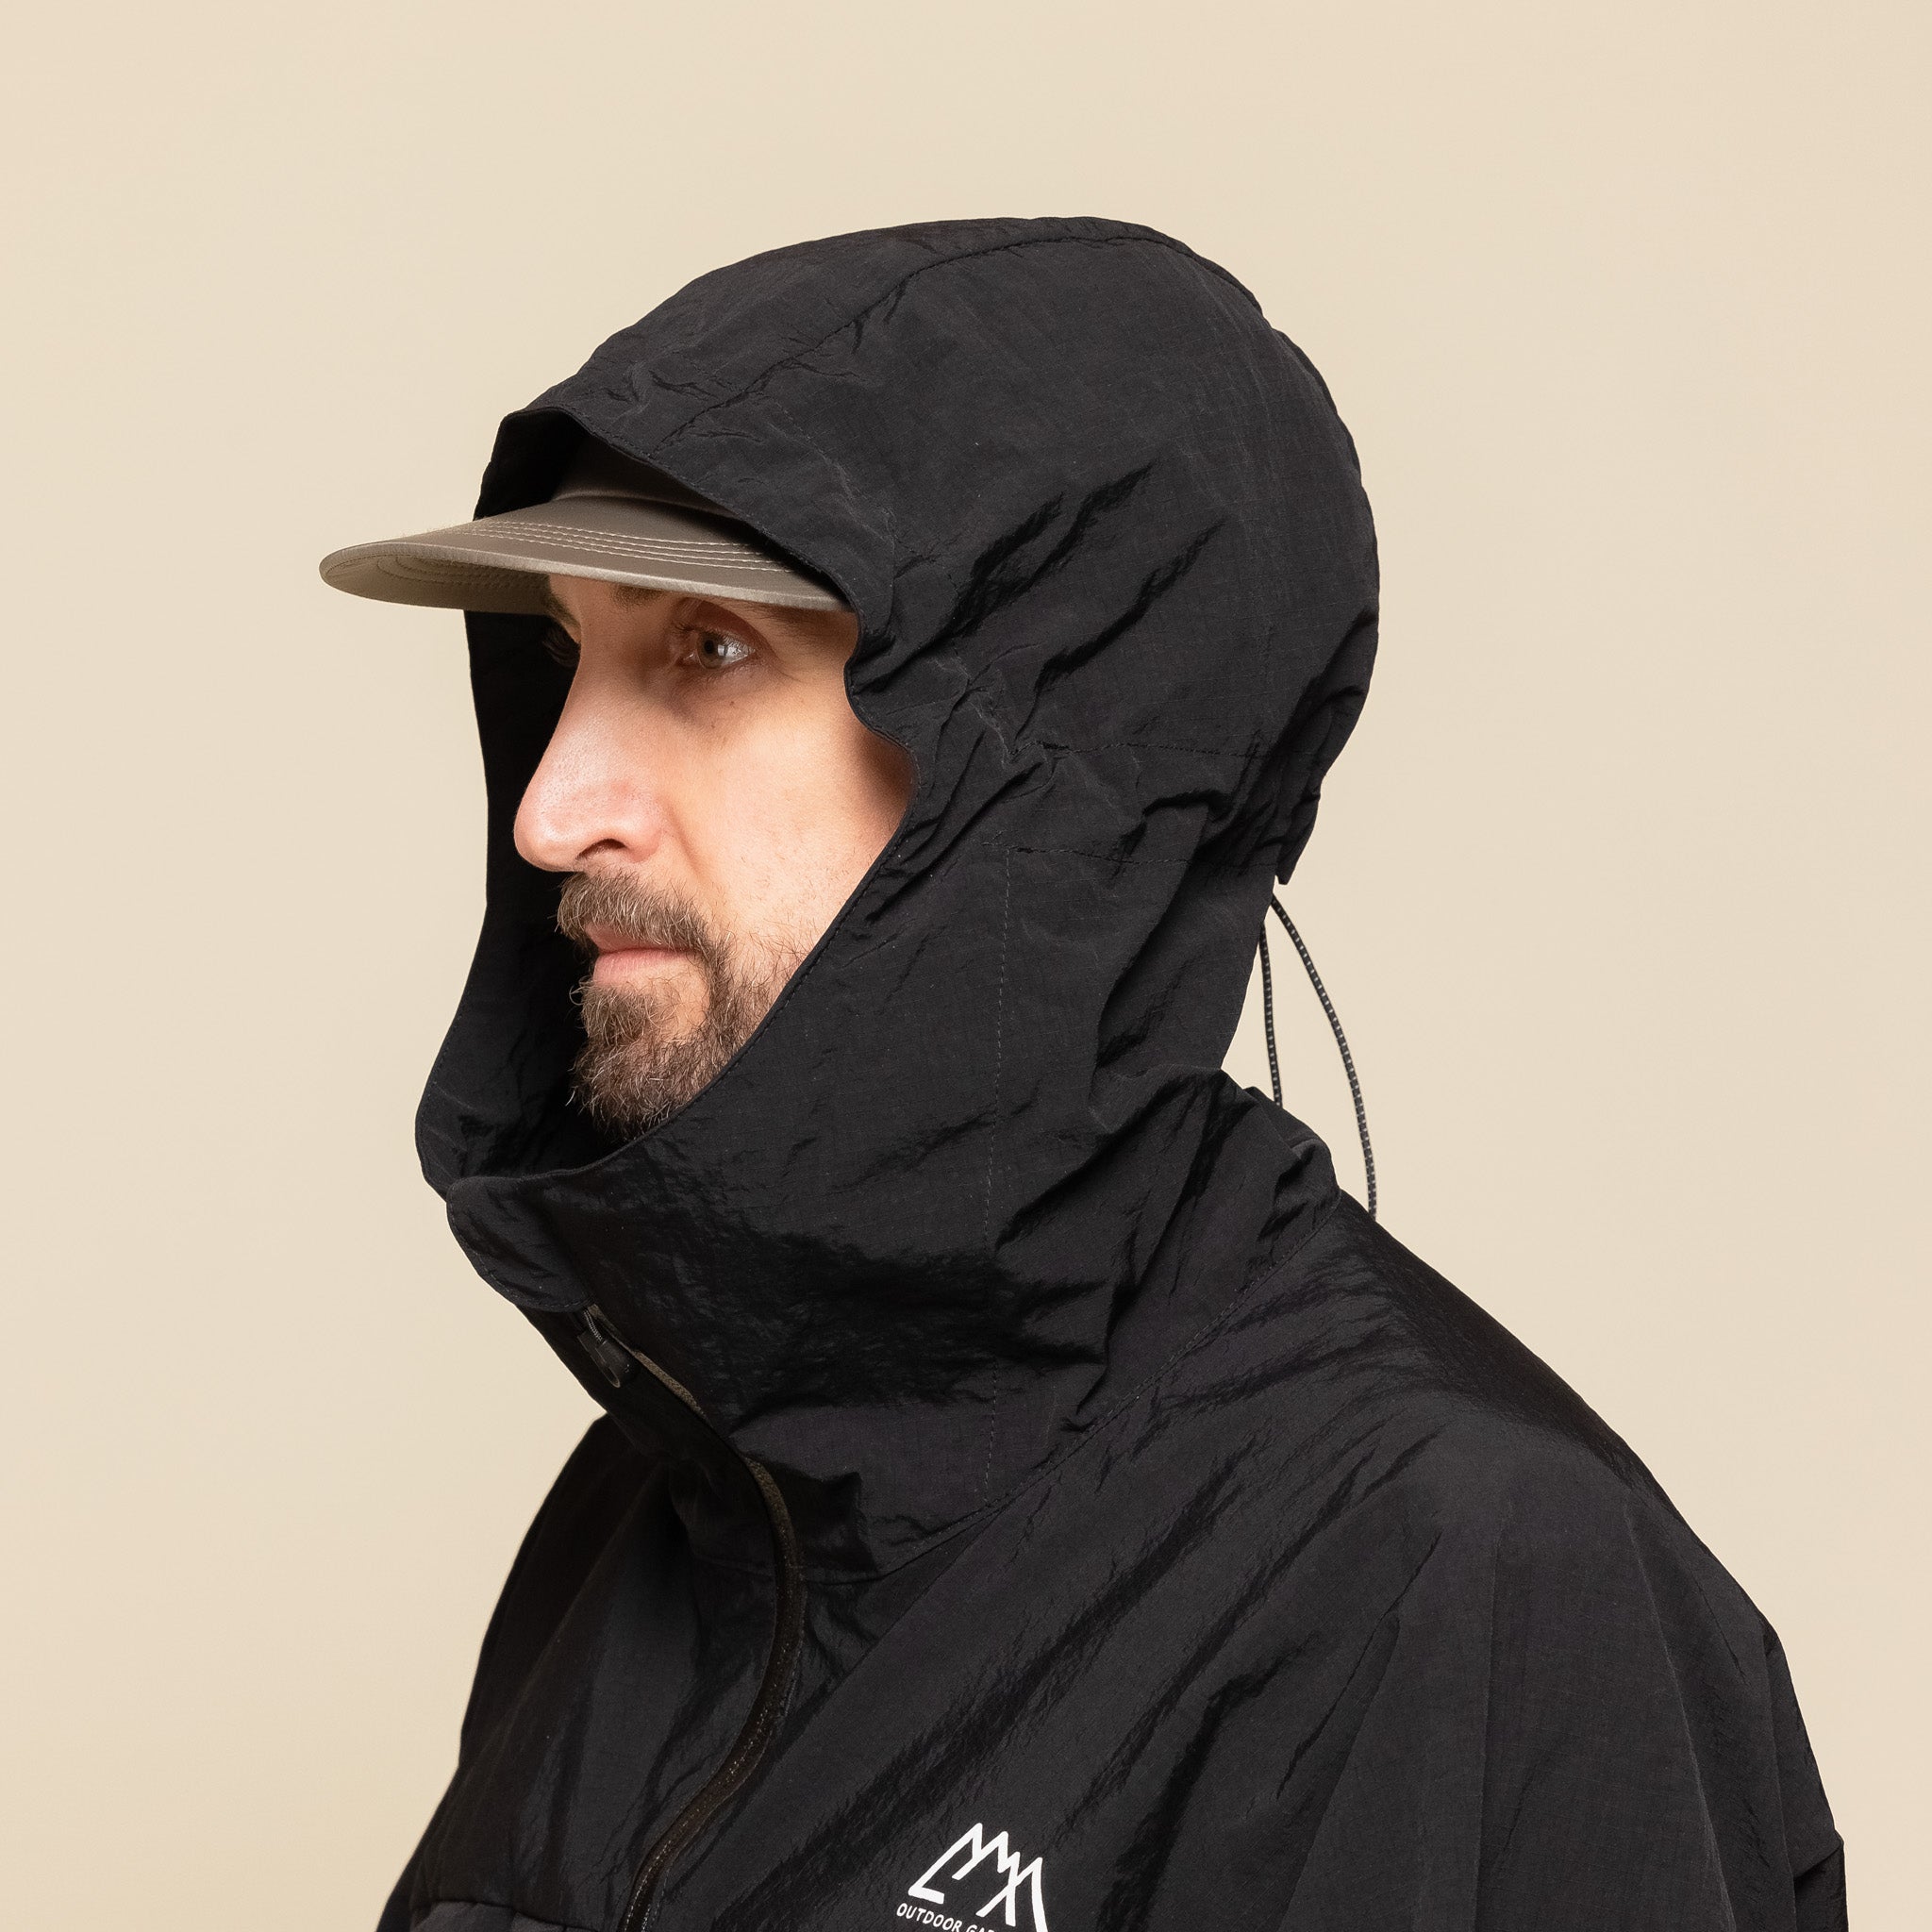 CMF Comfy Outdoor Garment - Anorak Hoodie Jacket - Black